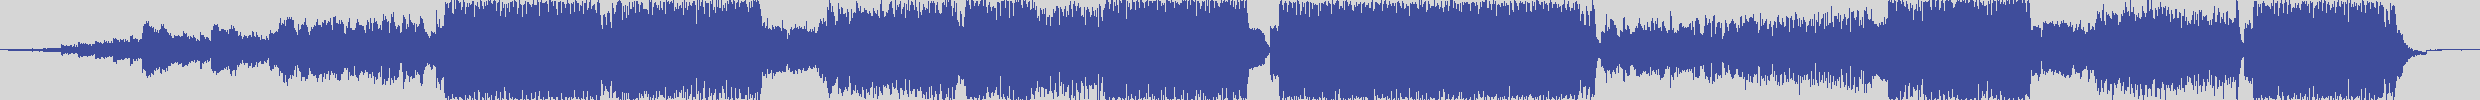 definitiva [DEF010] Wem-j. - La Rondine [Dj Cutry Power Radio] audio wave form